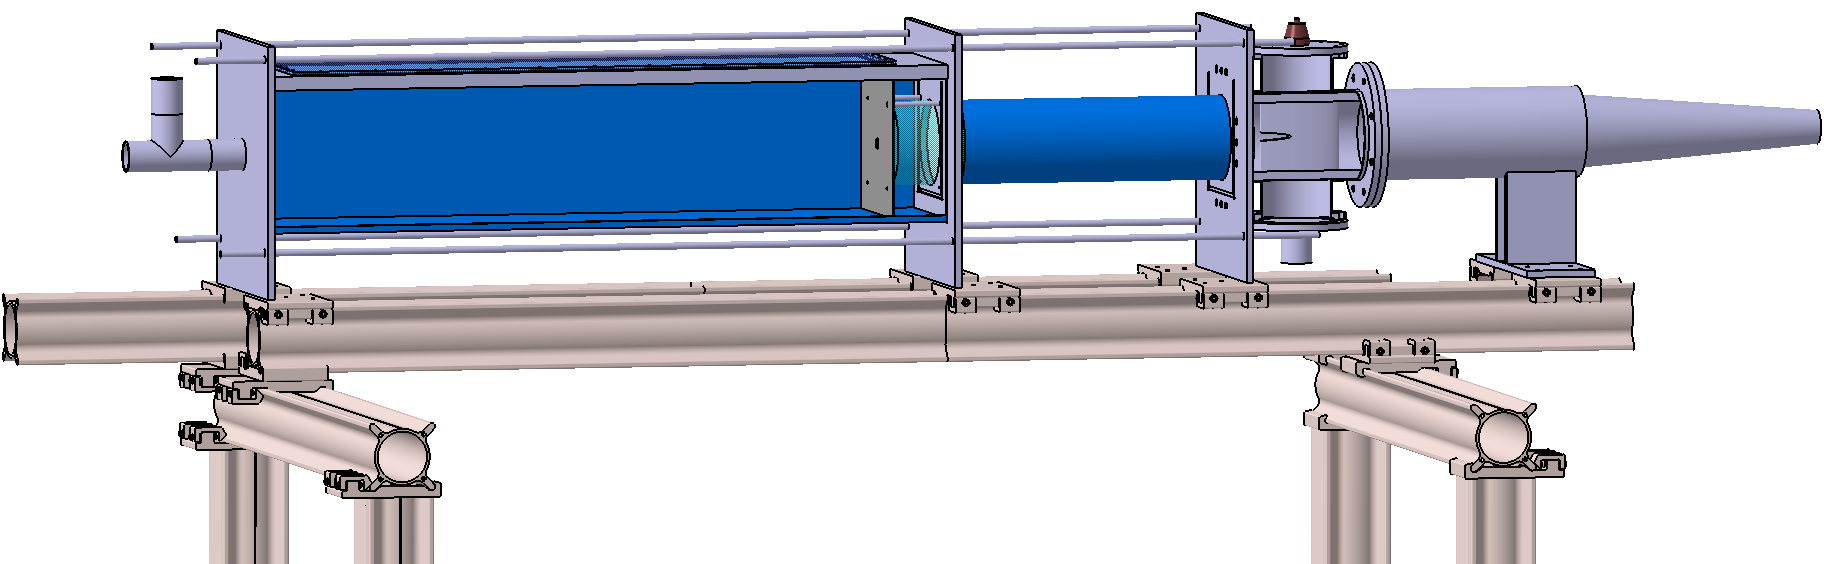 Hochdruck-Dispergier-Wasserkanal_CAD.jpg